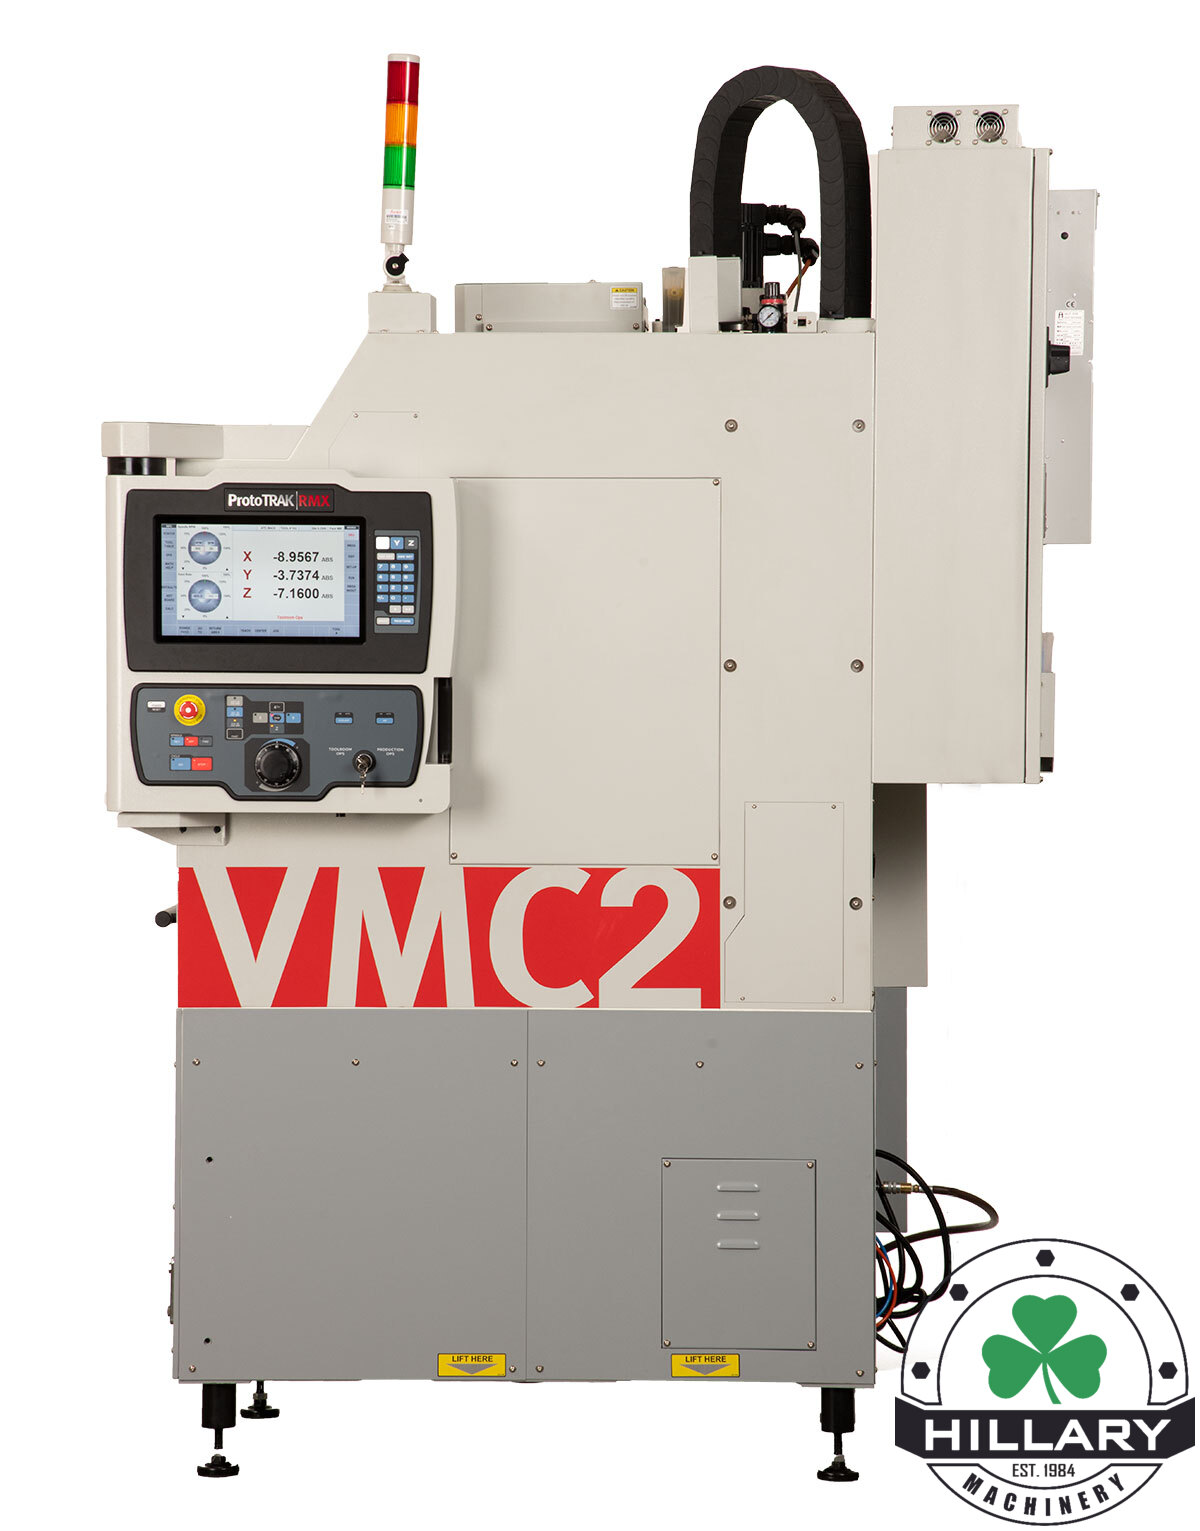 SOUTHWESTERN INDUSTRIES VMC2 (2OP) Tool Room Mills | Hillary Machinery